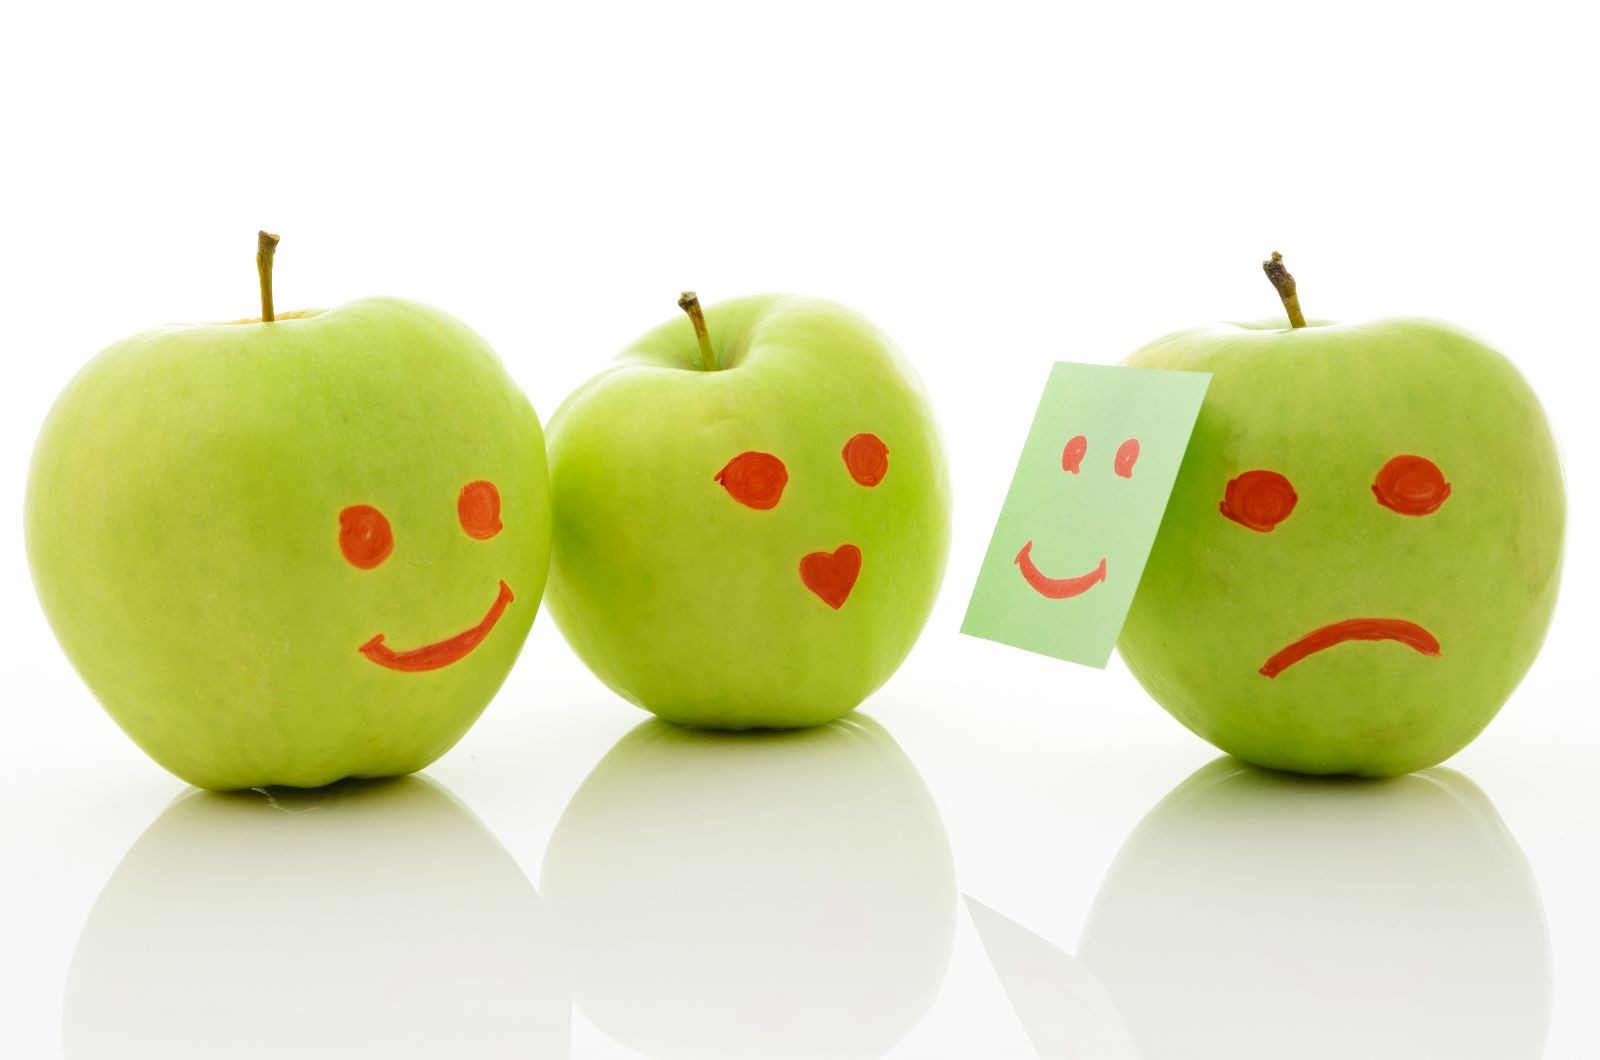 Tres manzanas con rostro una escondiendo tristeza